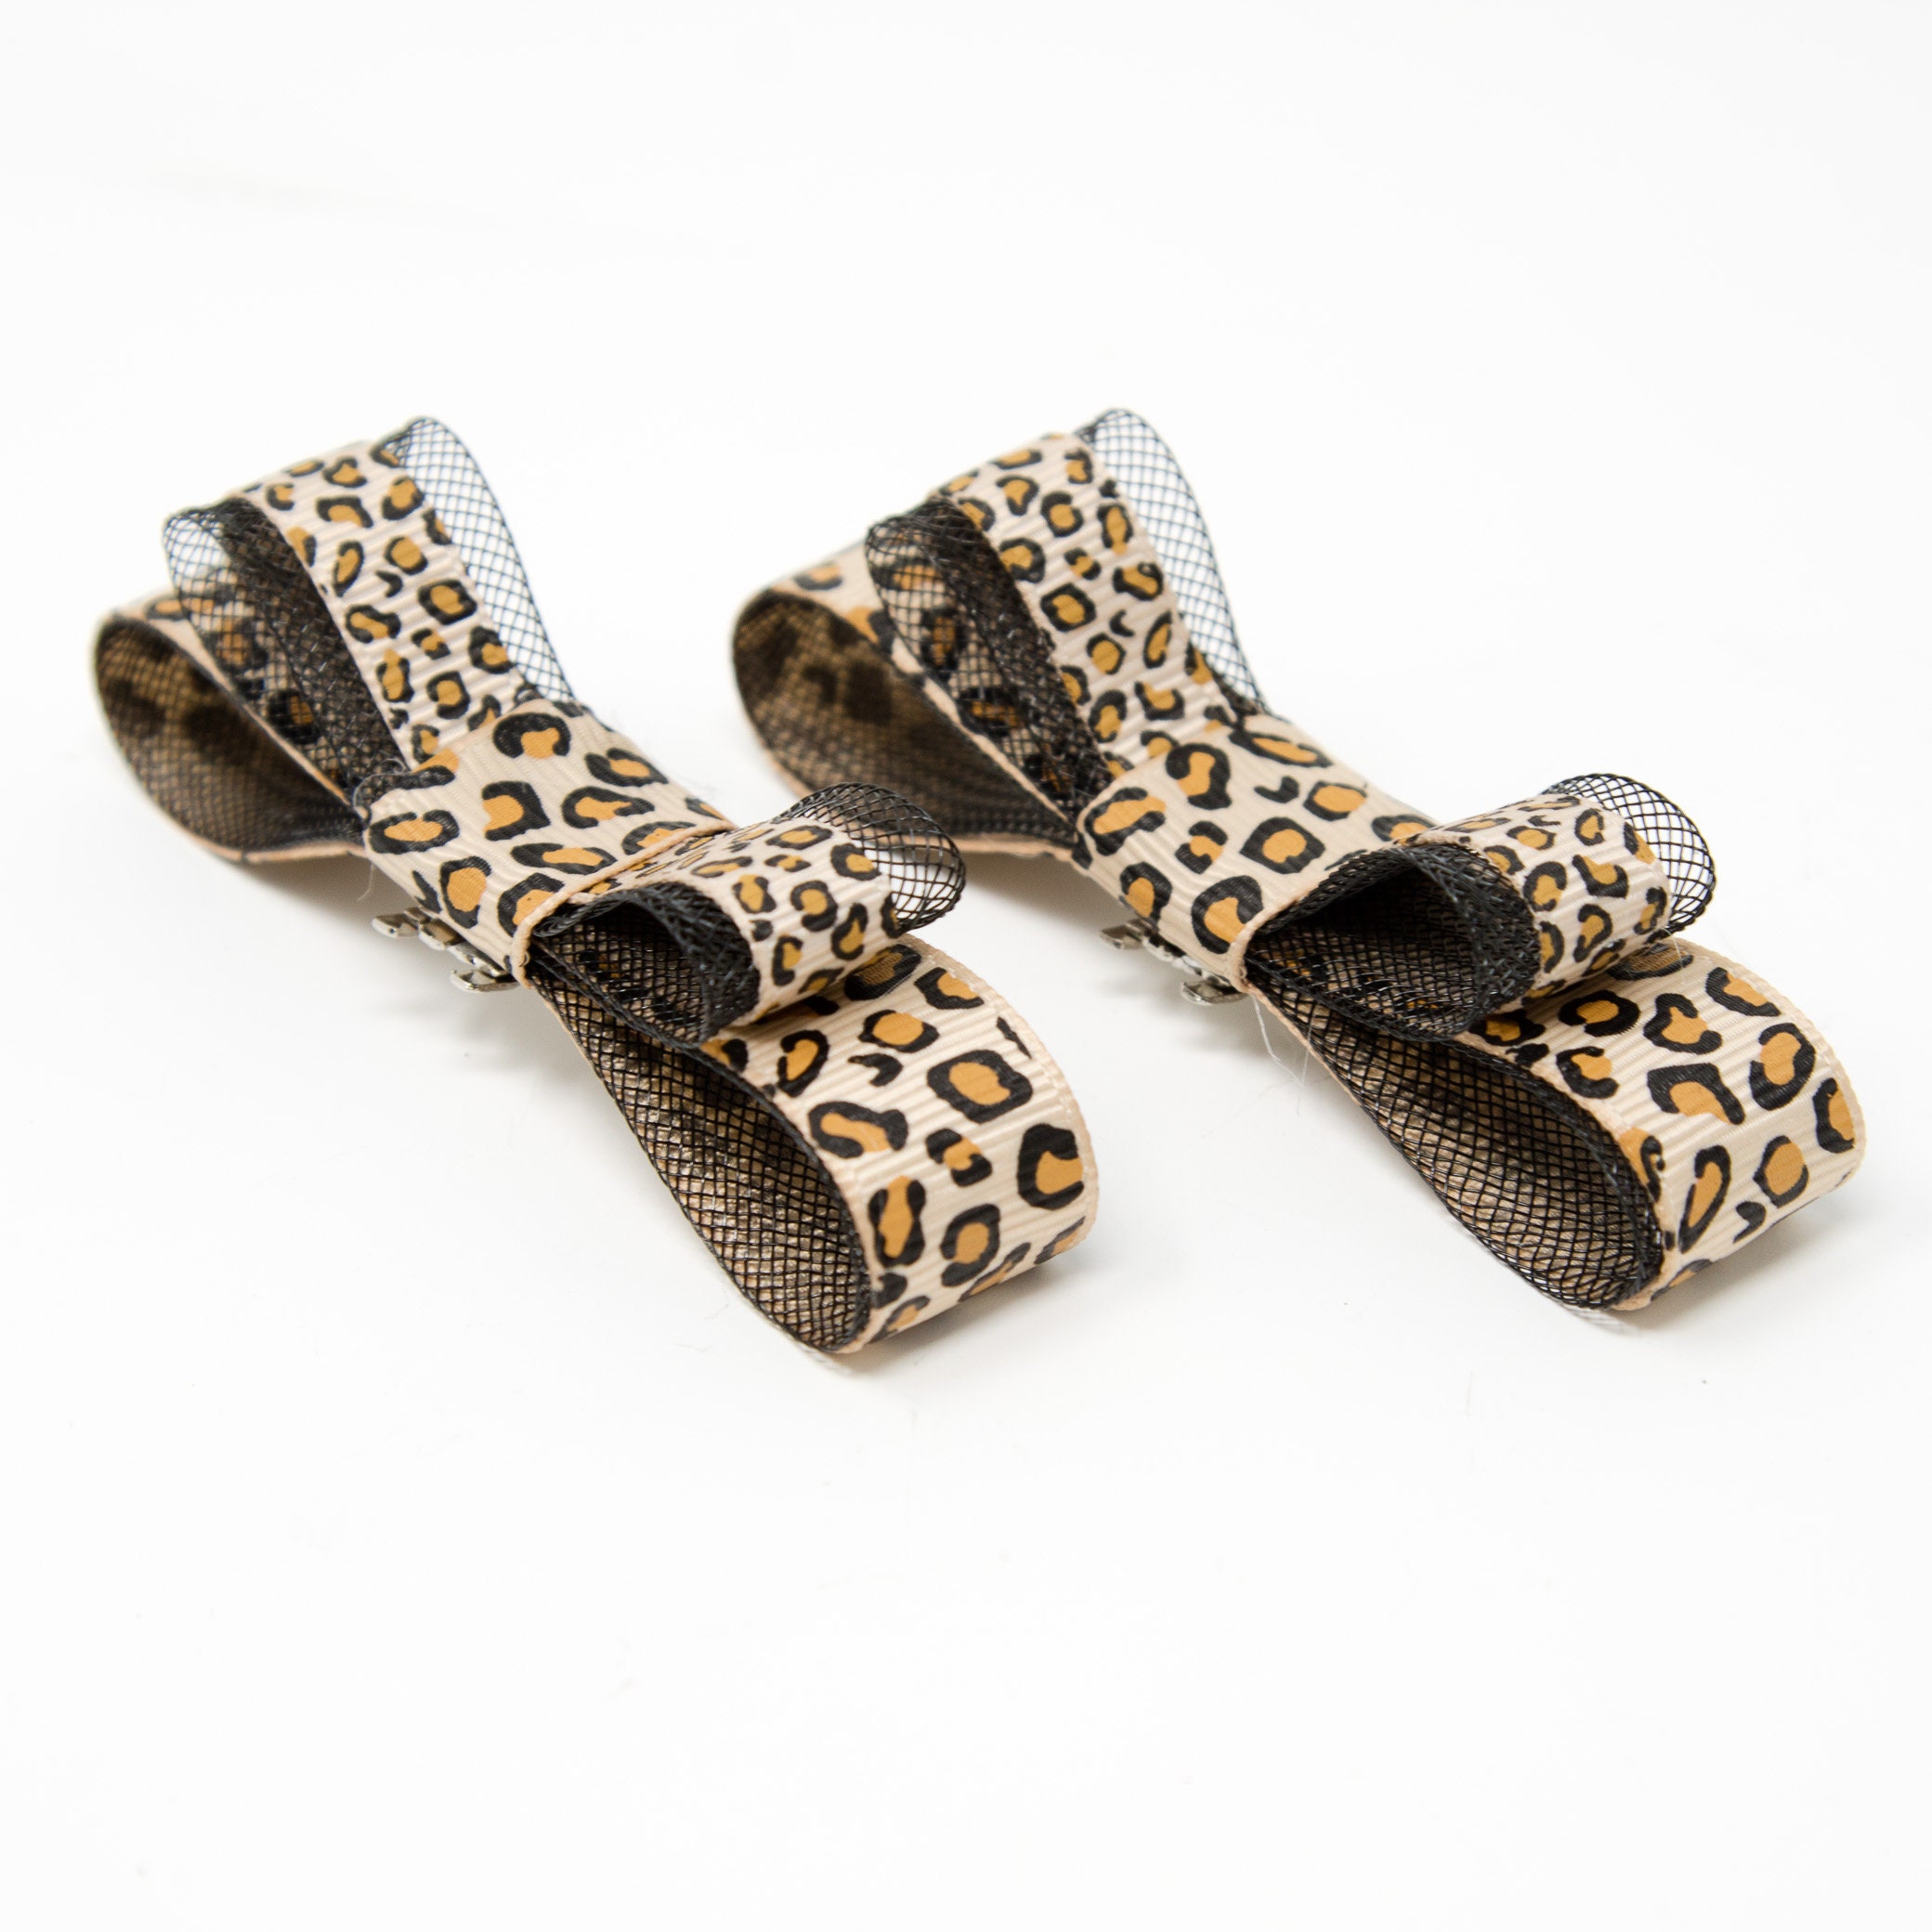 Leopard print shoe clips | Etsy